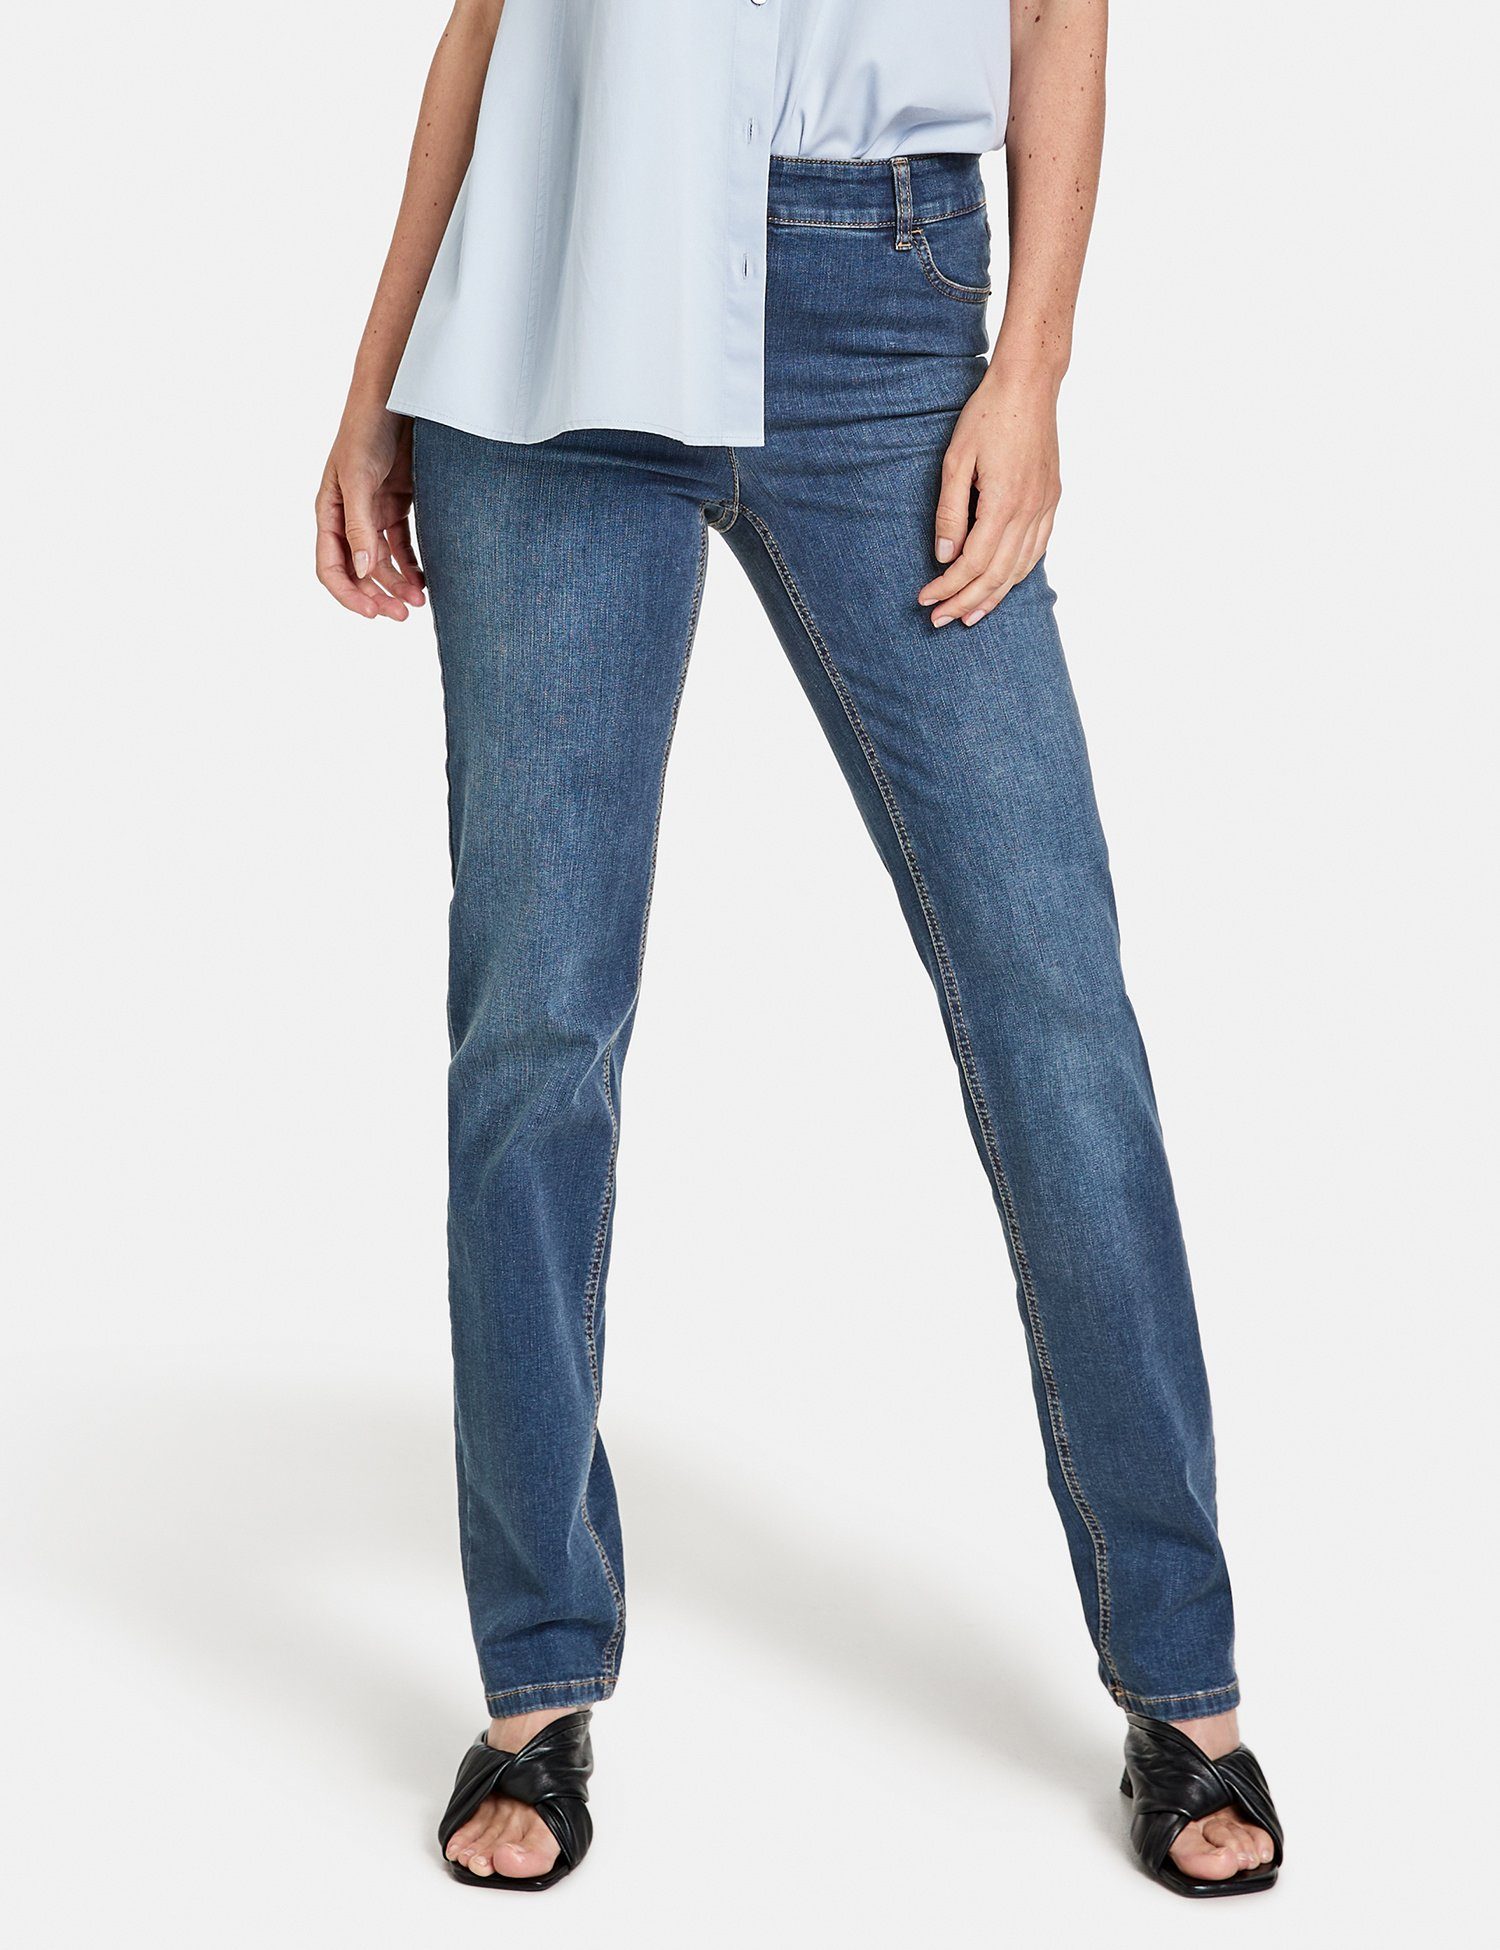 GERRY WEBER Stretch-Jeans 5-Pocket Jeans Straight Fit dark blue denim mit use